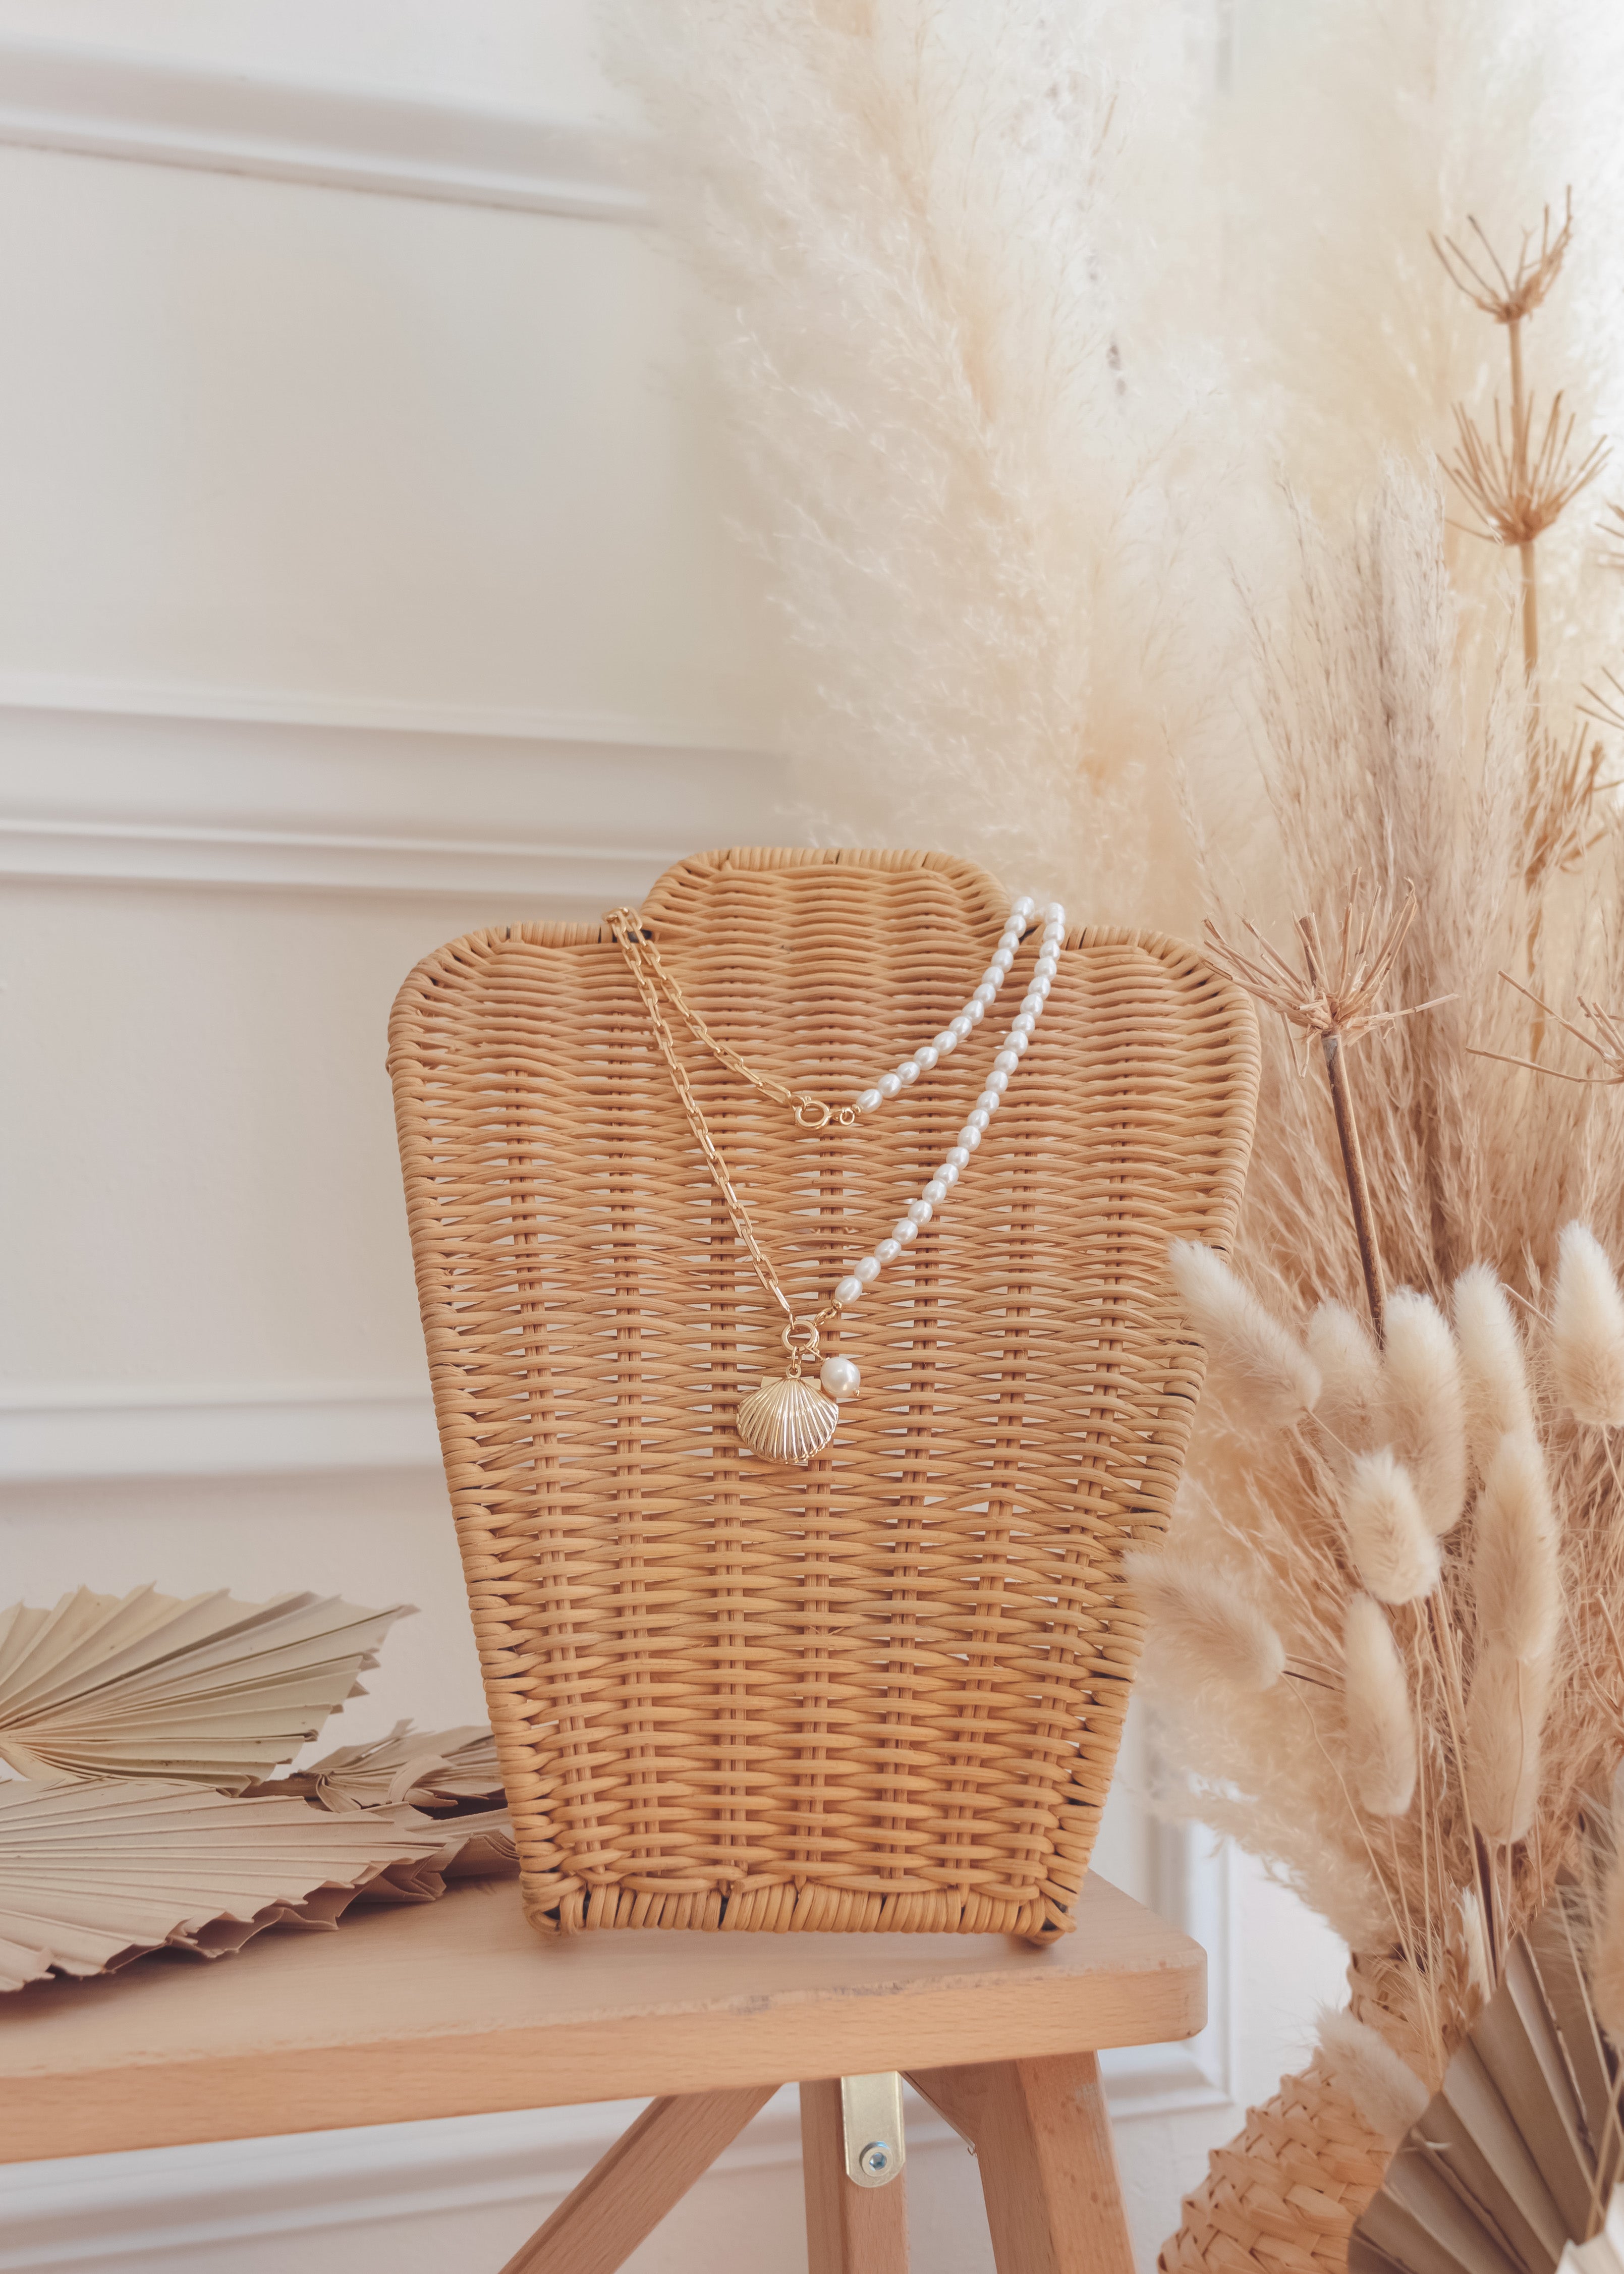 Seashell Island Thin Half & Half Gold Pearl Necklace